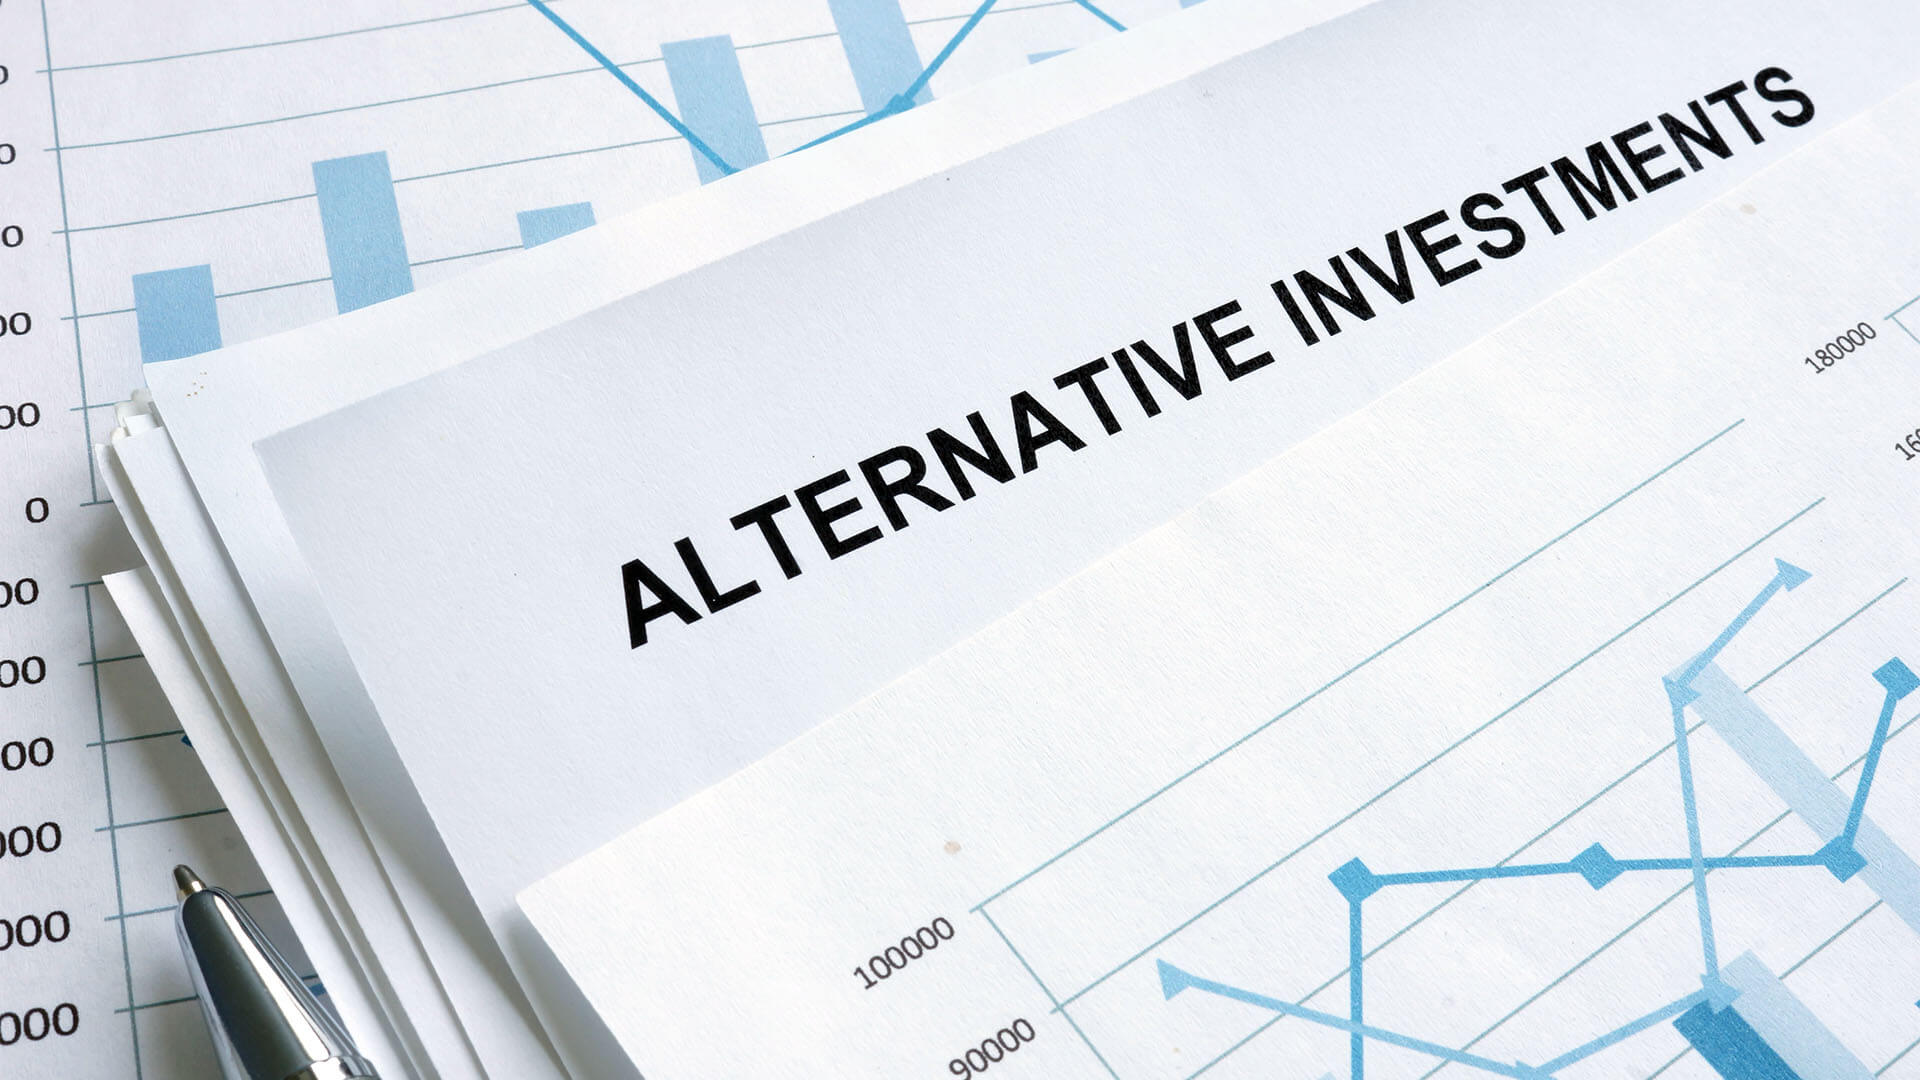 Alternative Investment Markets